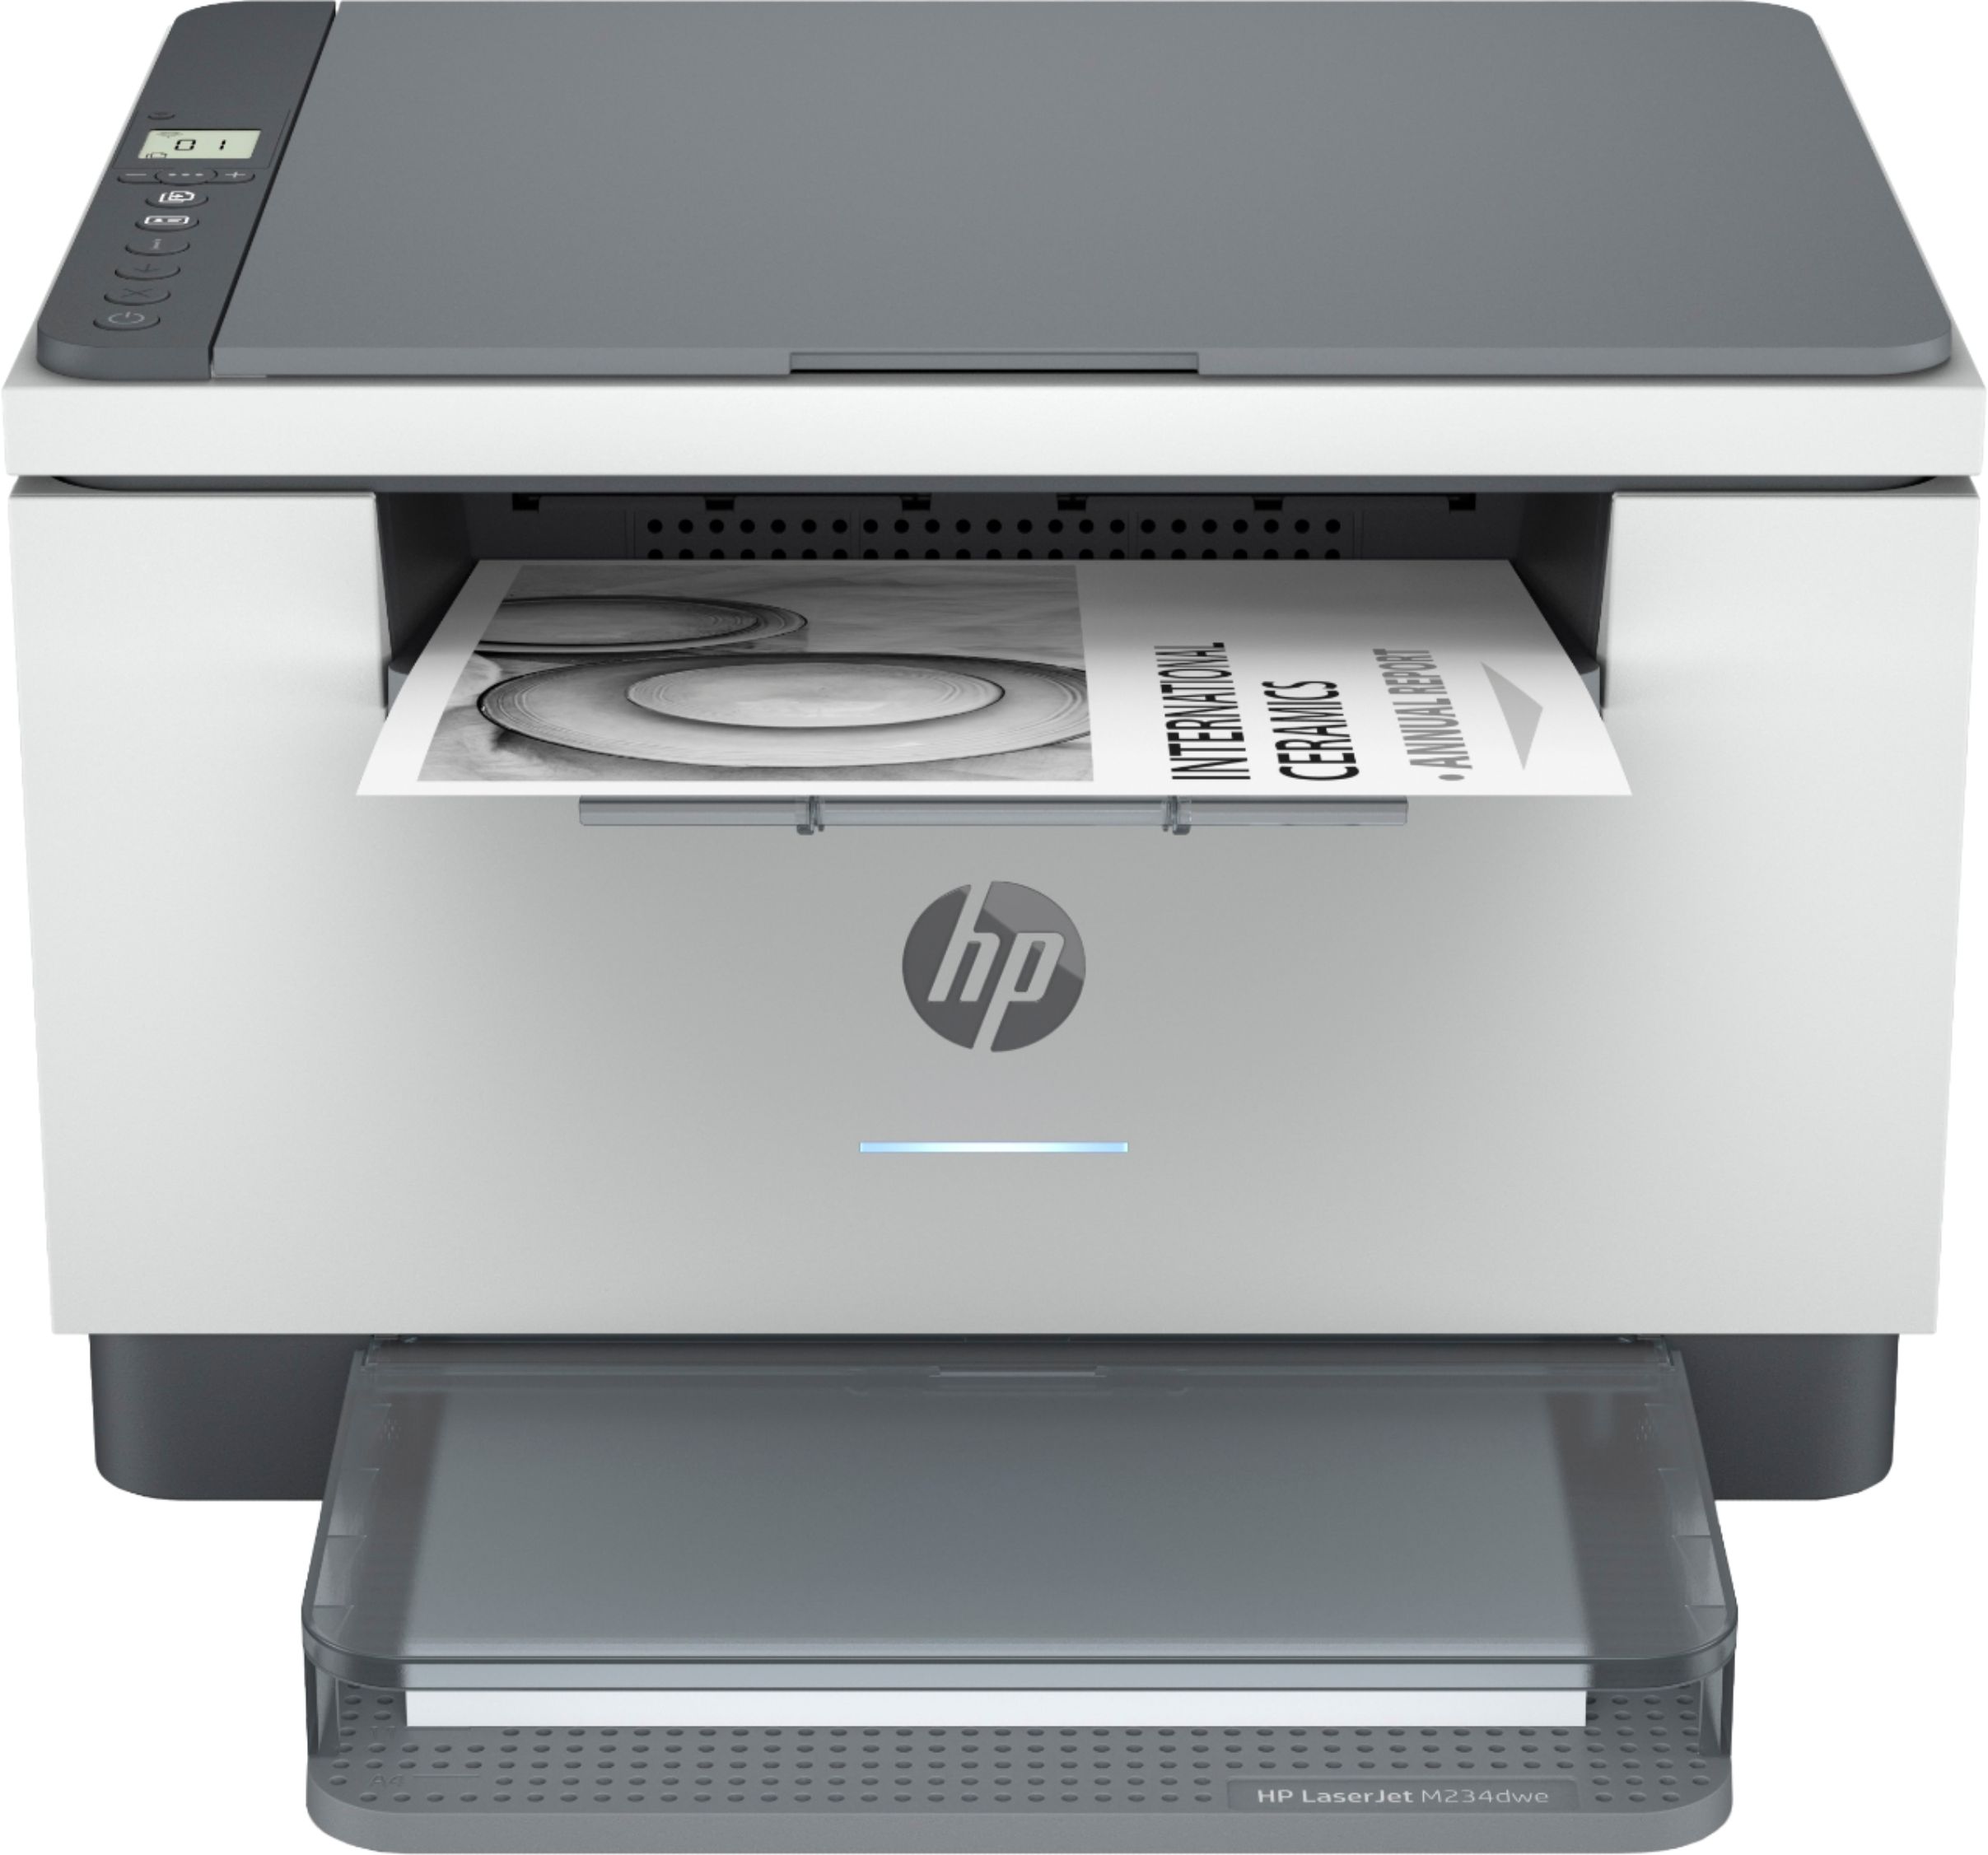 HP LaserJet M234dwe Wireless Black-and-White Laser Printer with 6 months of Toner HP+ White & Slate M234dwe - Best